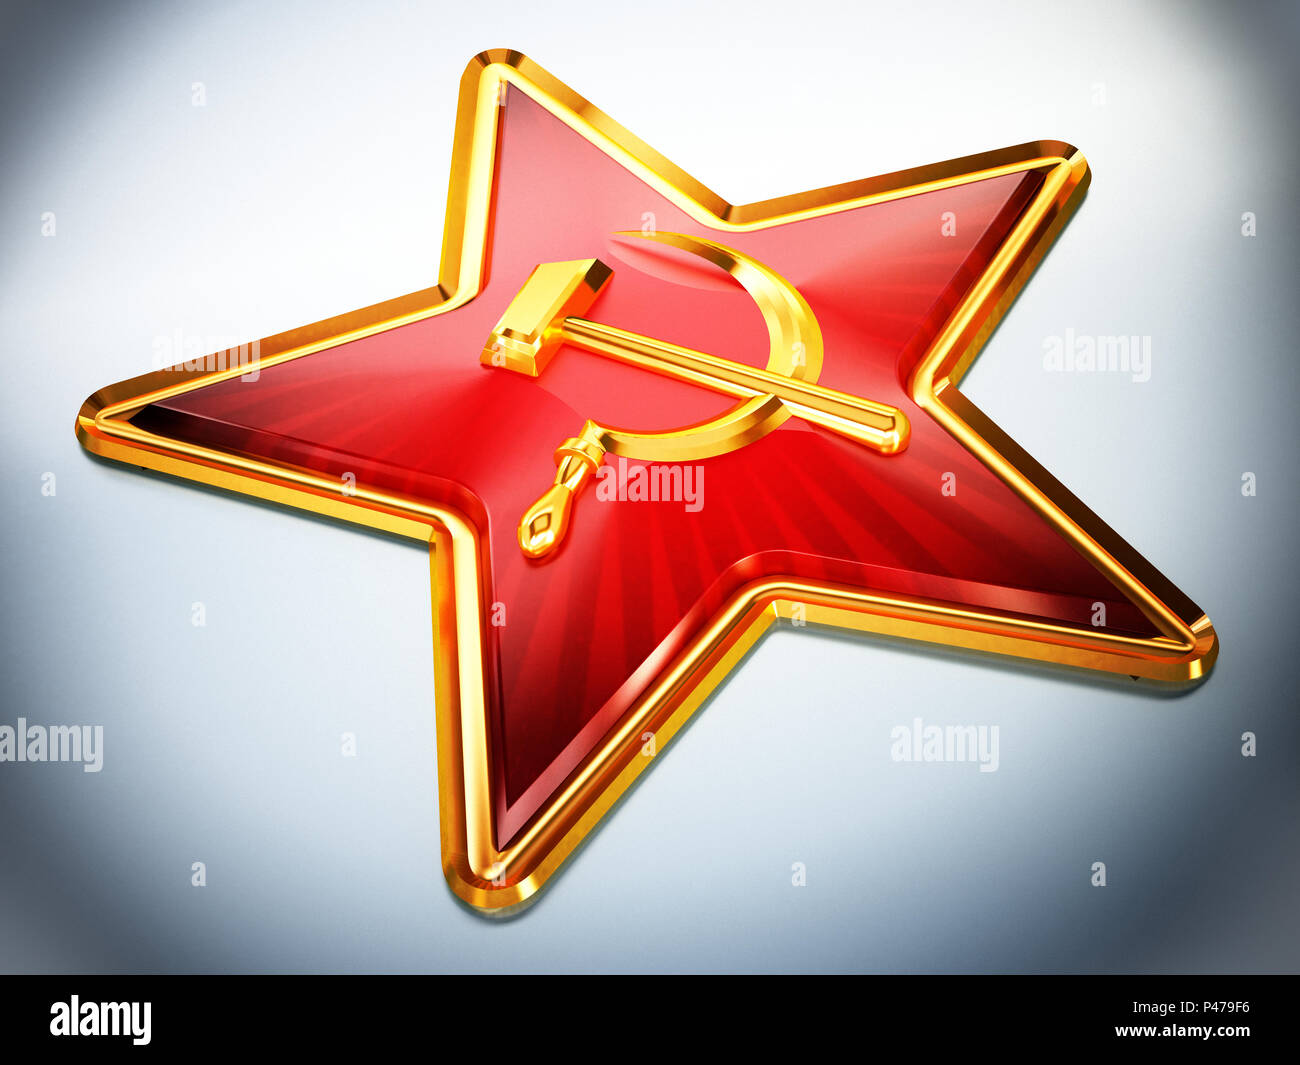 https://c8.alamy.com/comp/P479F6/communist-symbols-hammer-and-sickle-on-red-star-3d-illustration-P479F6.jpg